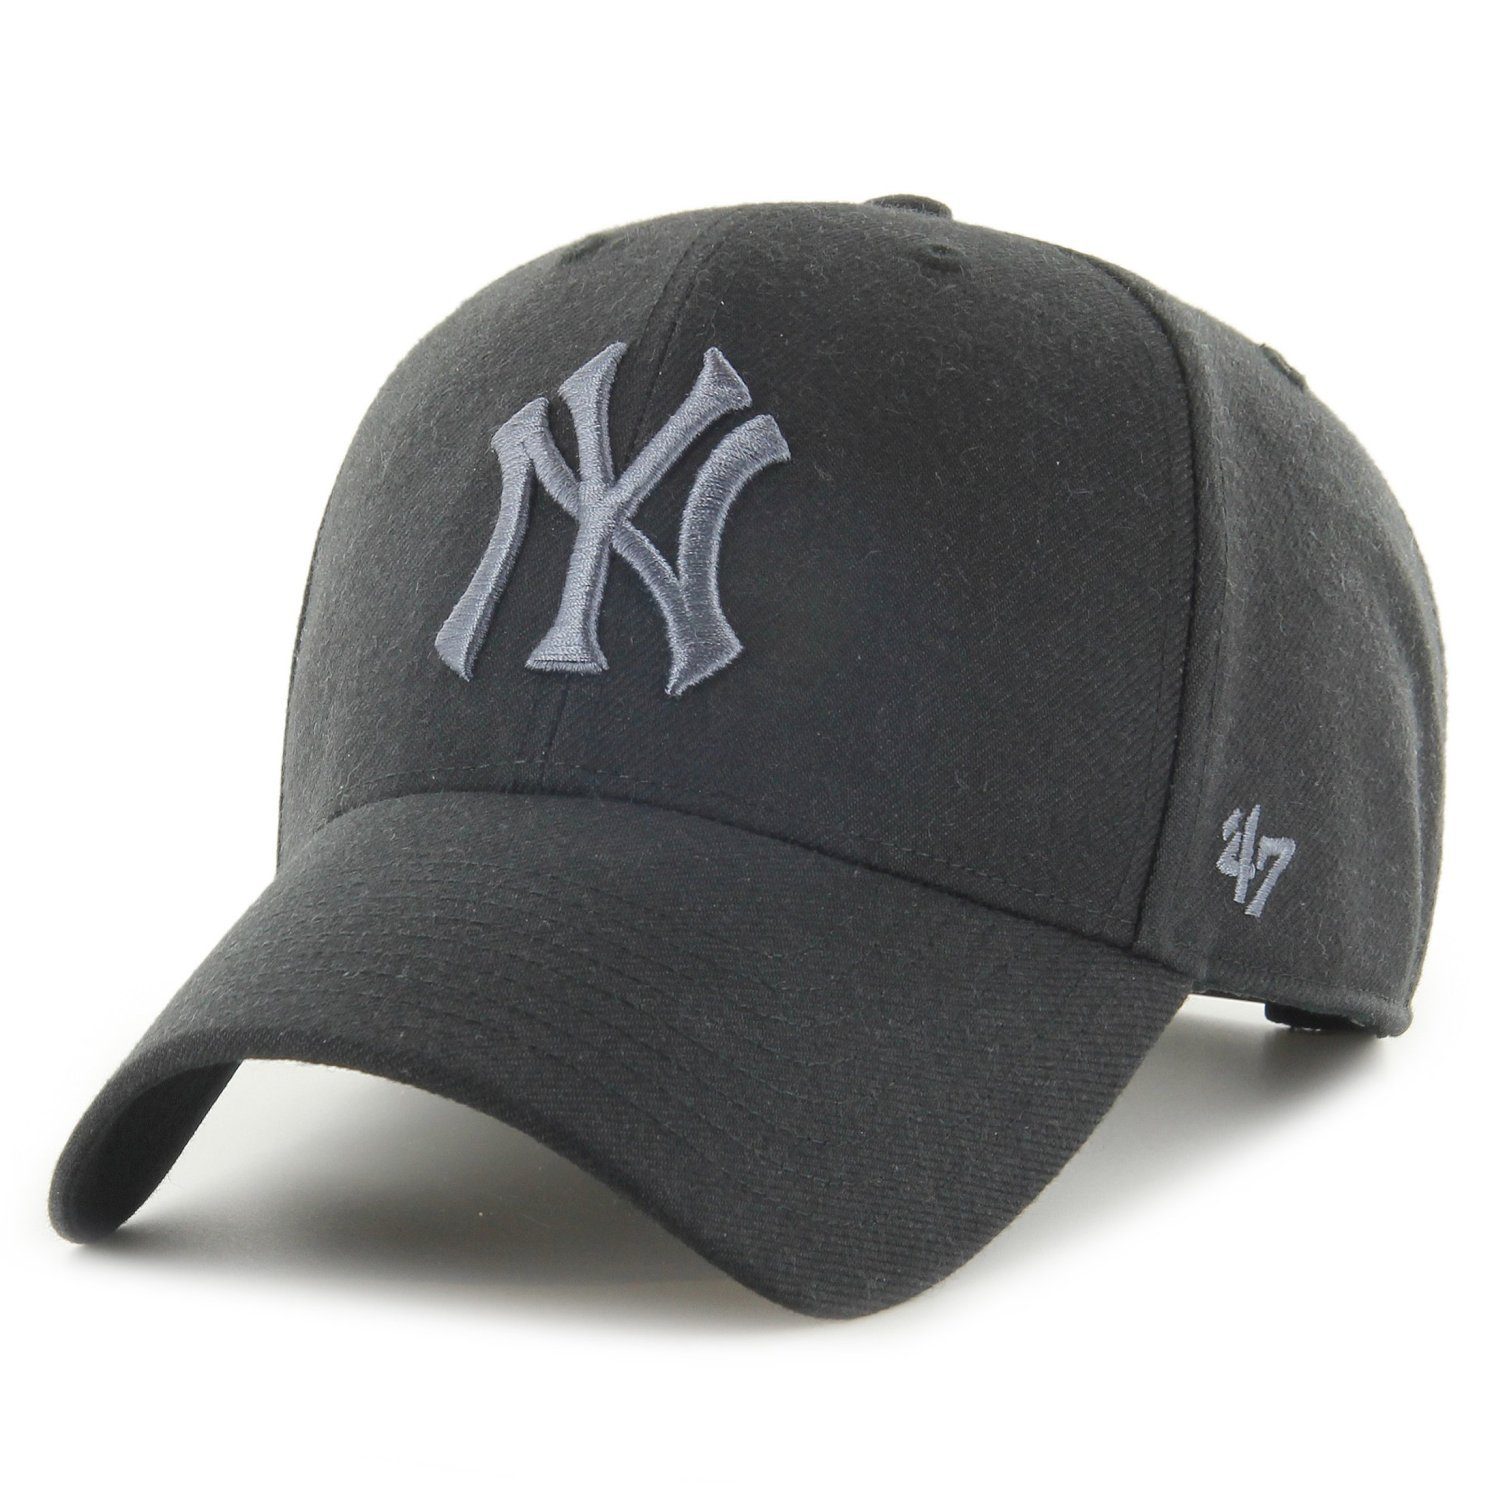 '47 York New Curved MLB Yankees Brand Trucker Cap